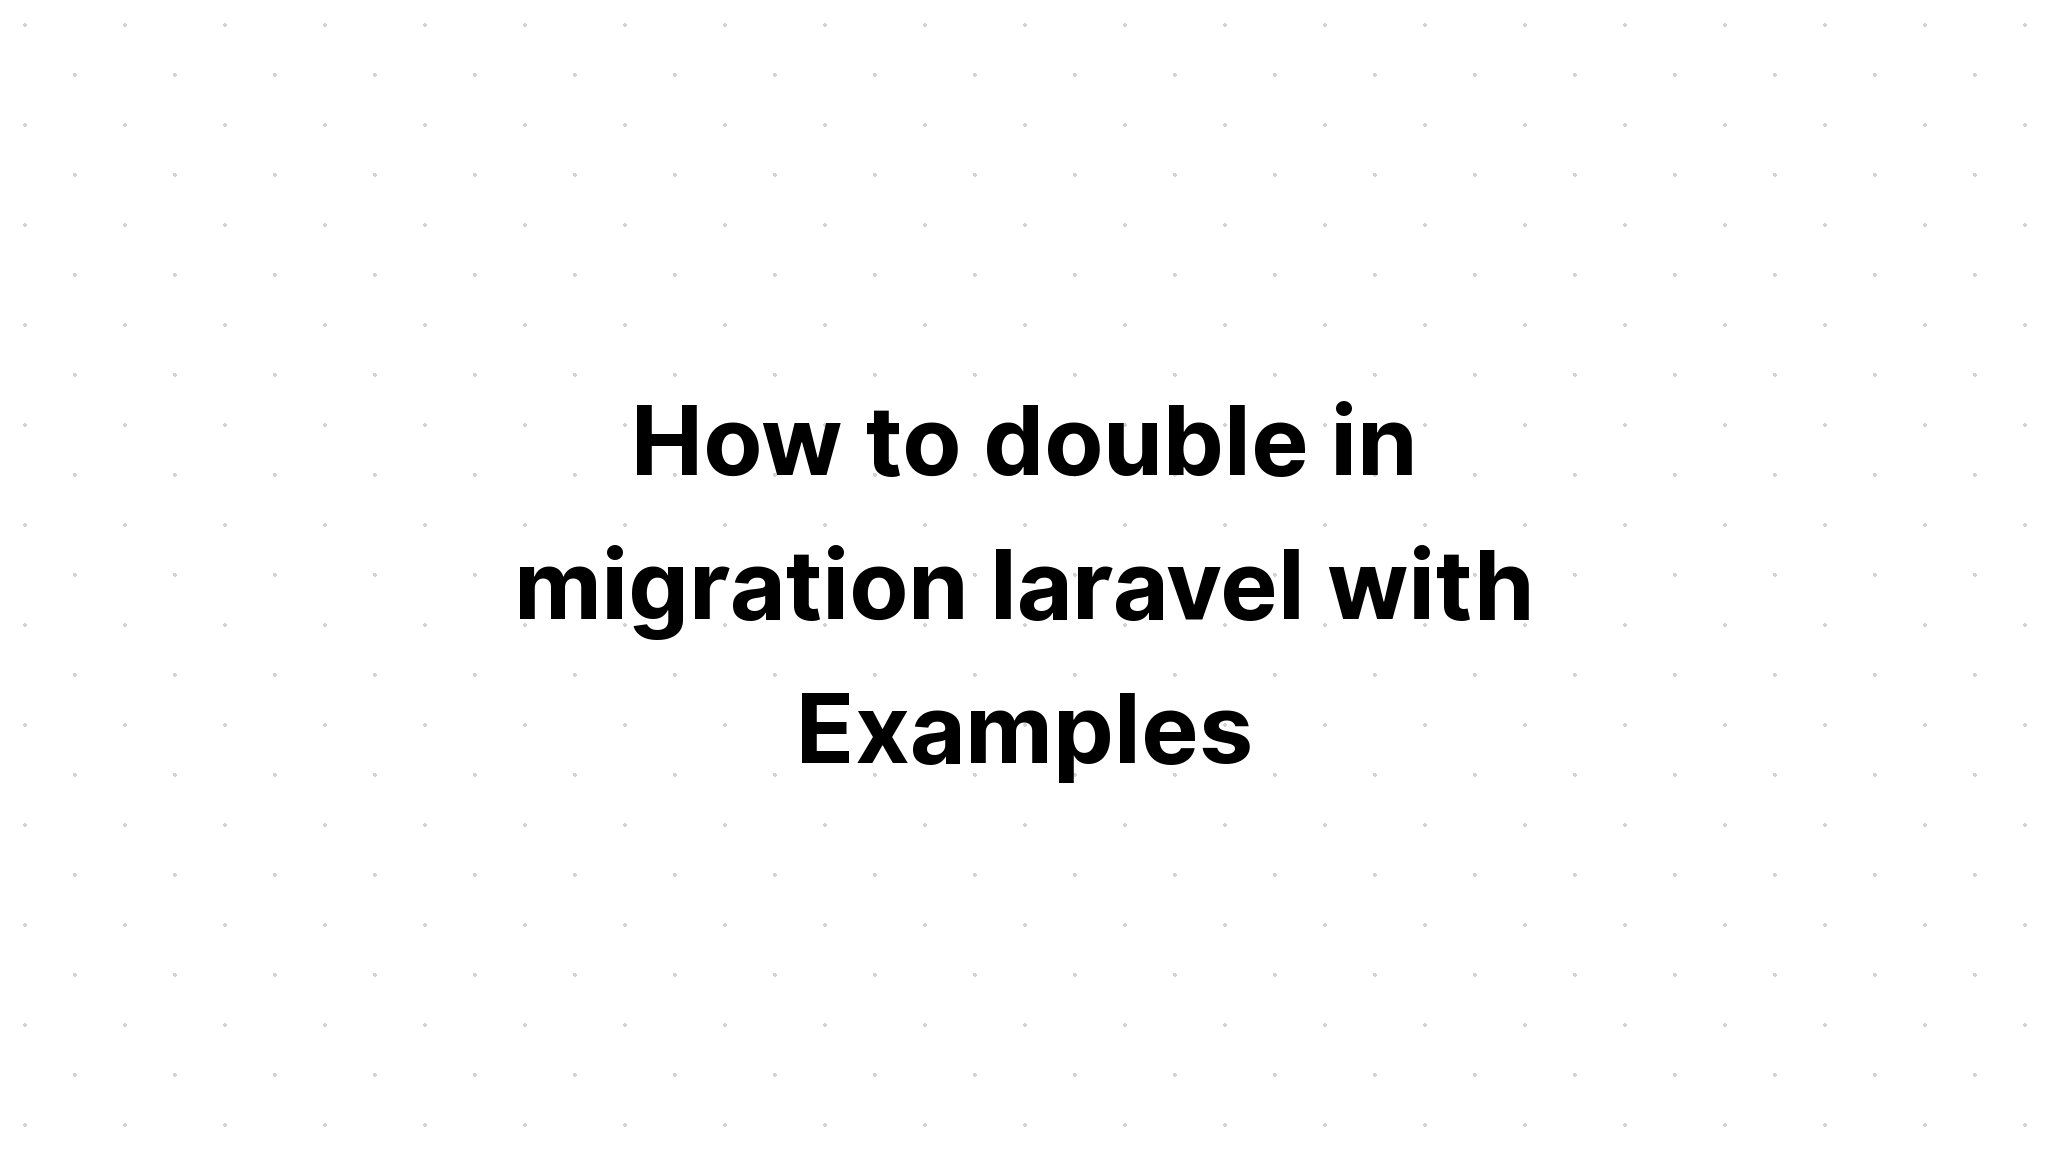 Cara menggandakan migrasi laravel dengan Contoh